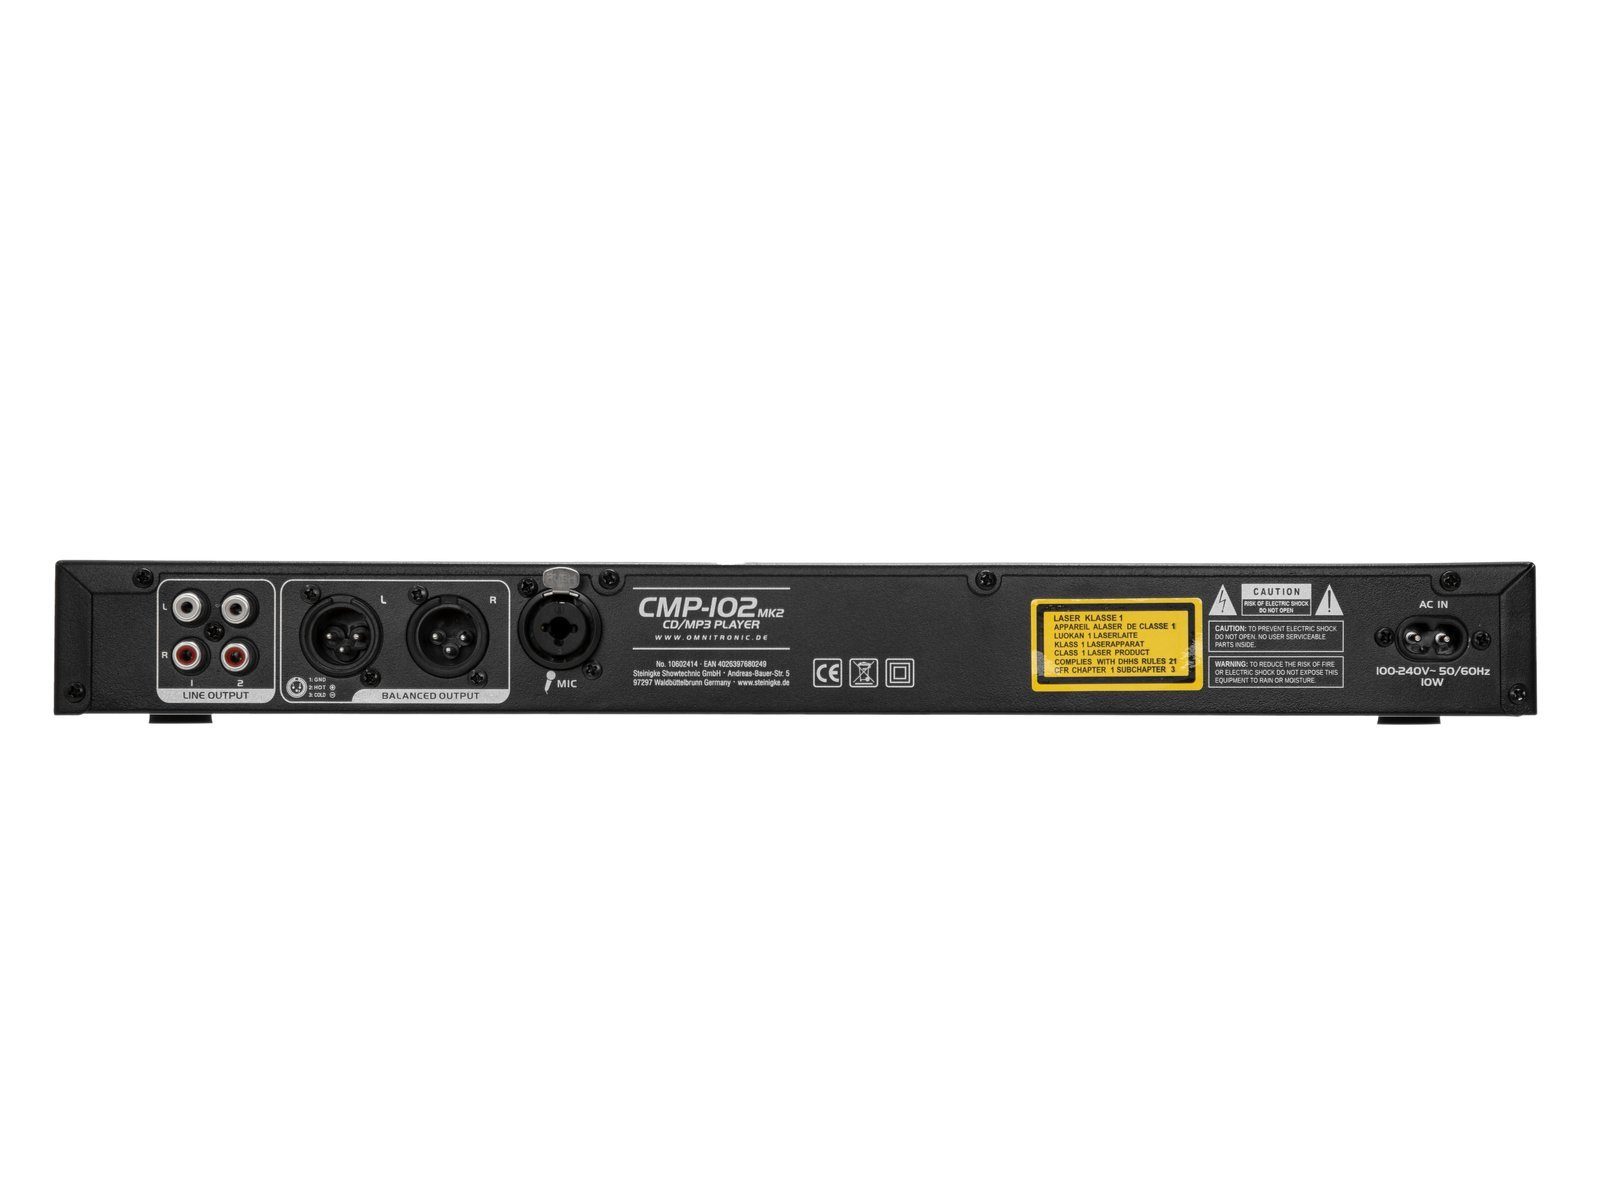 Omnitronic CMP-102 MK2 (1 Einbauversion) CD-/MP3-Player HE Player Stereo-CD